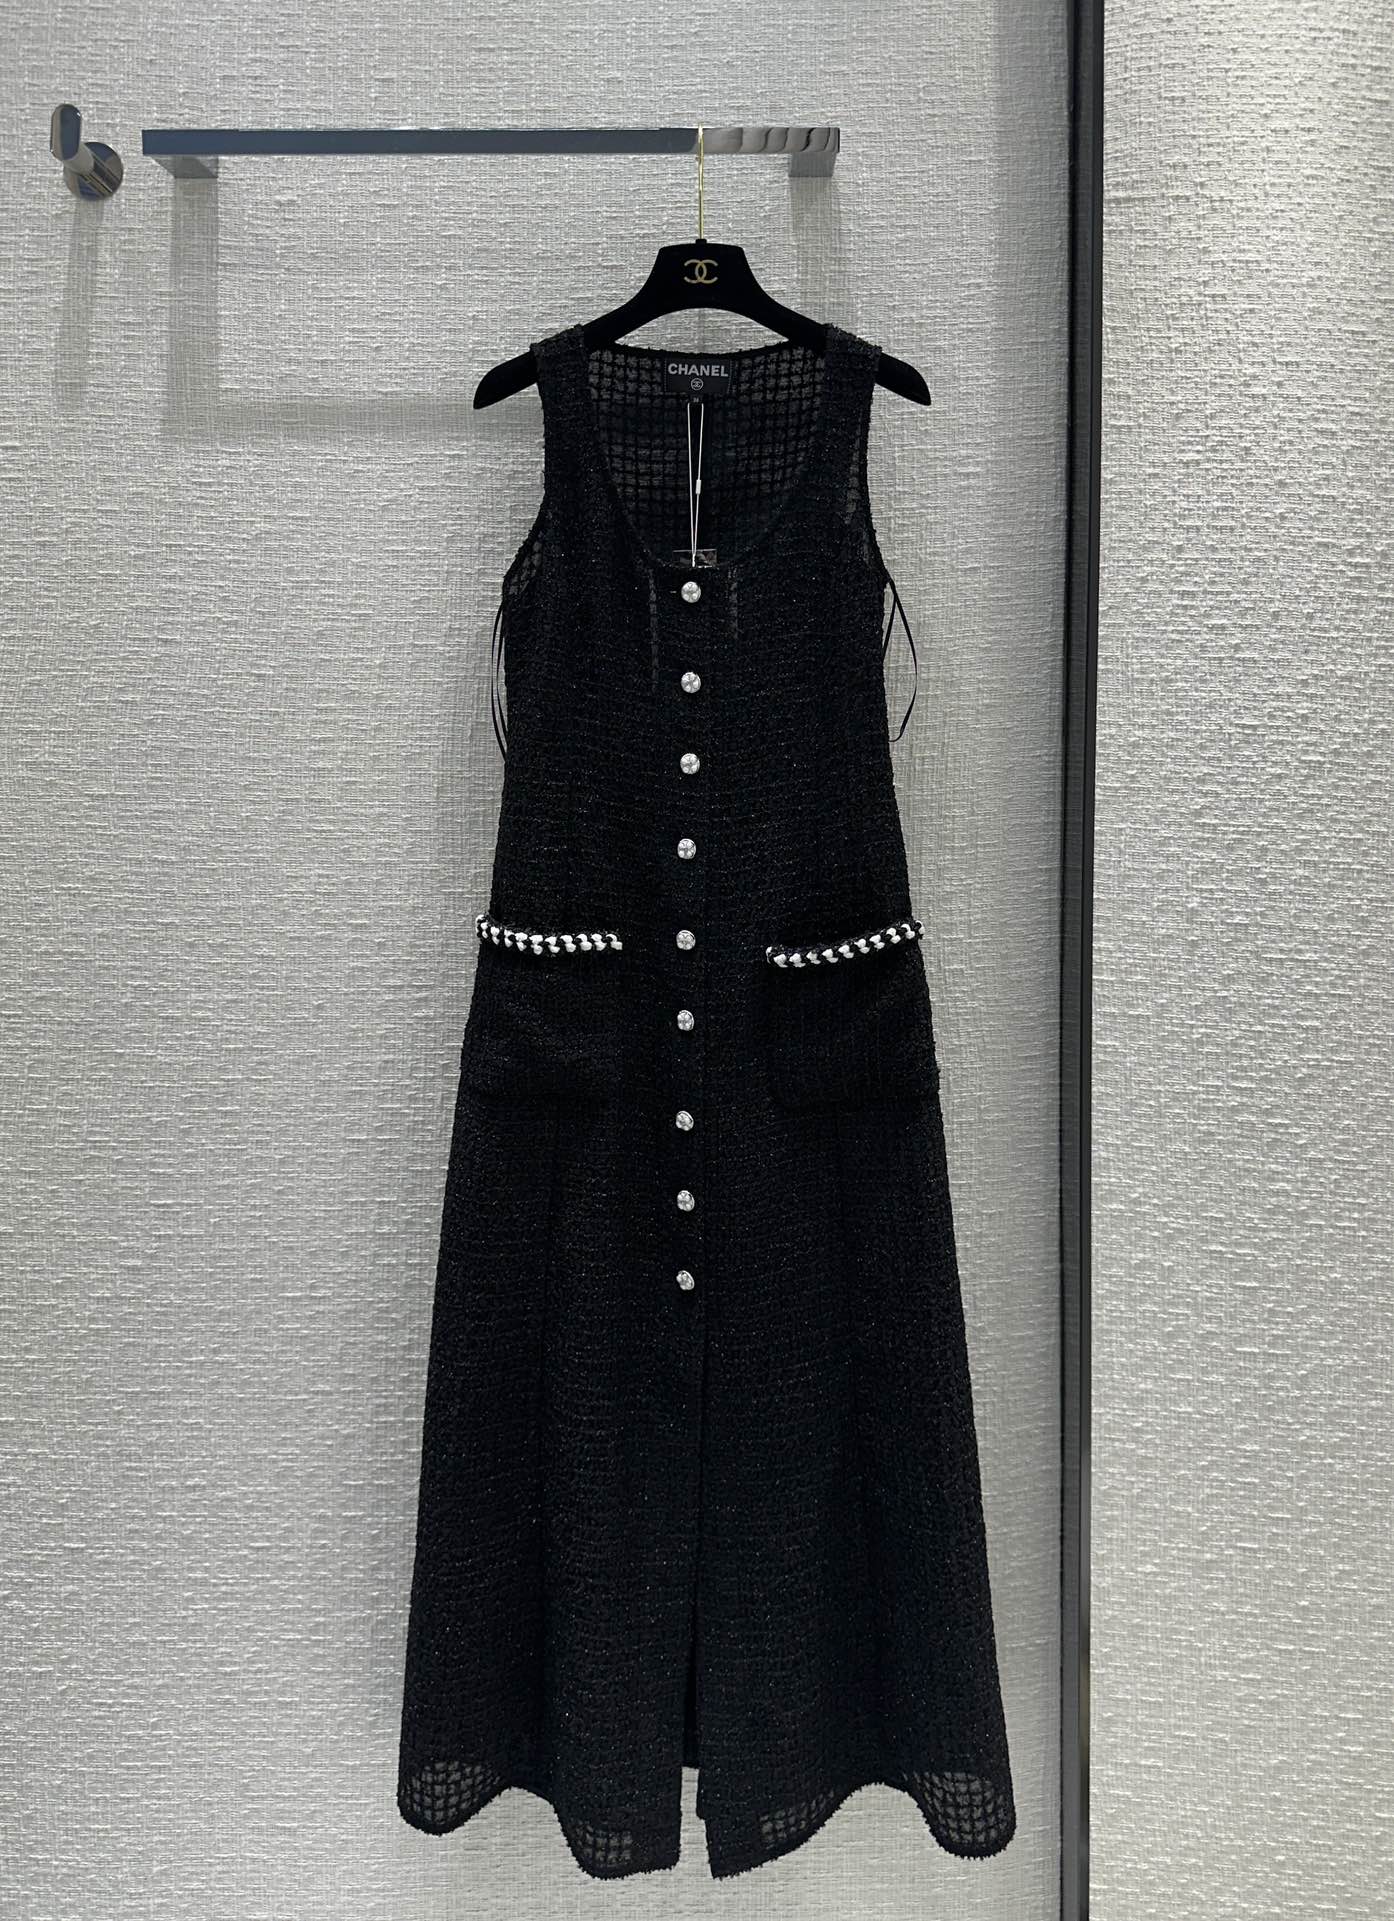 Vender en línea
 Chanel Clothing Dresses Waistcoats Black White Vintage